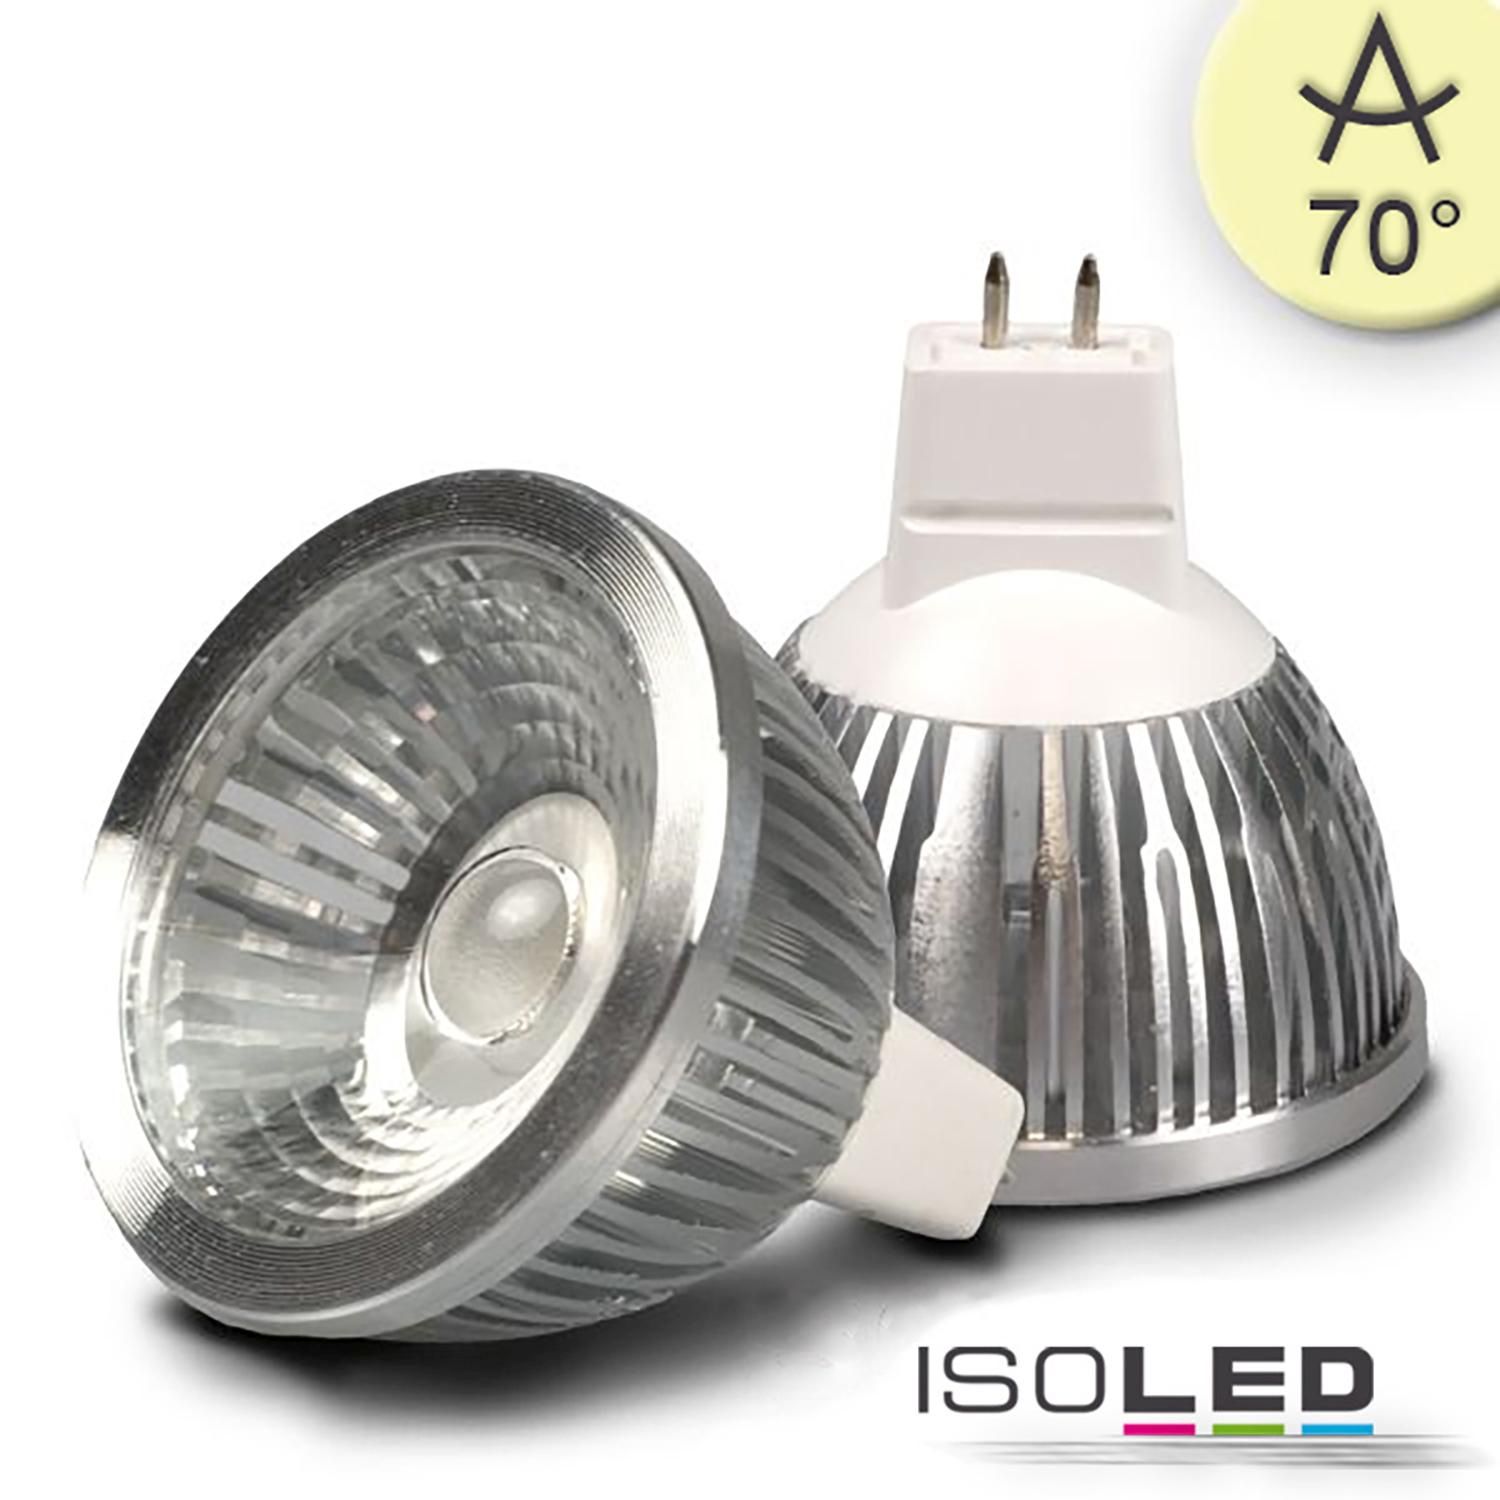 MR16 LED spotlight 5.5W COB, 70°, warm white, dimmable - MASTERLIGHT